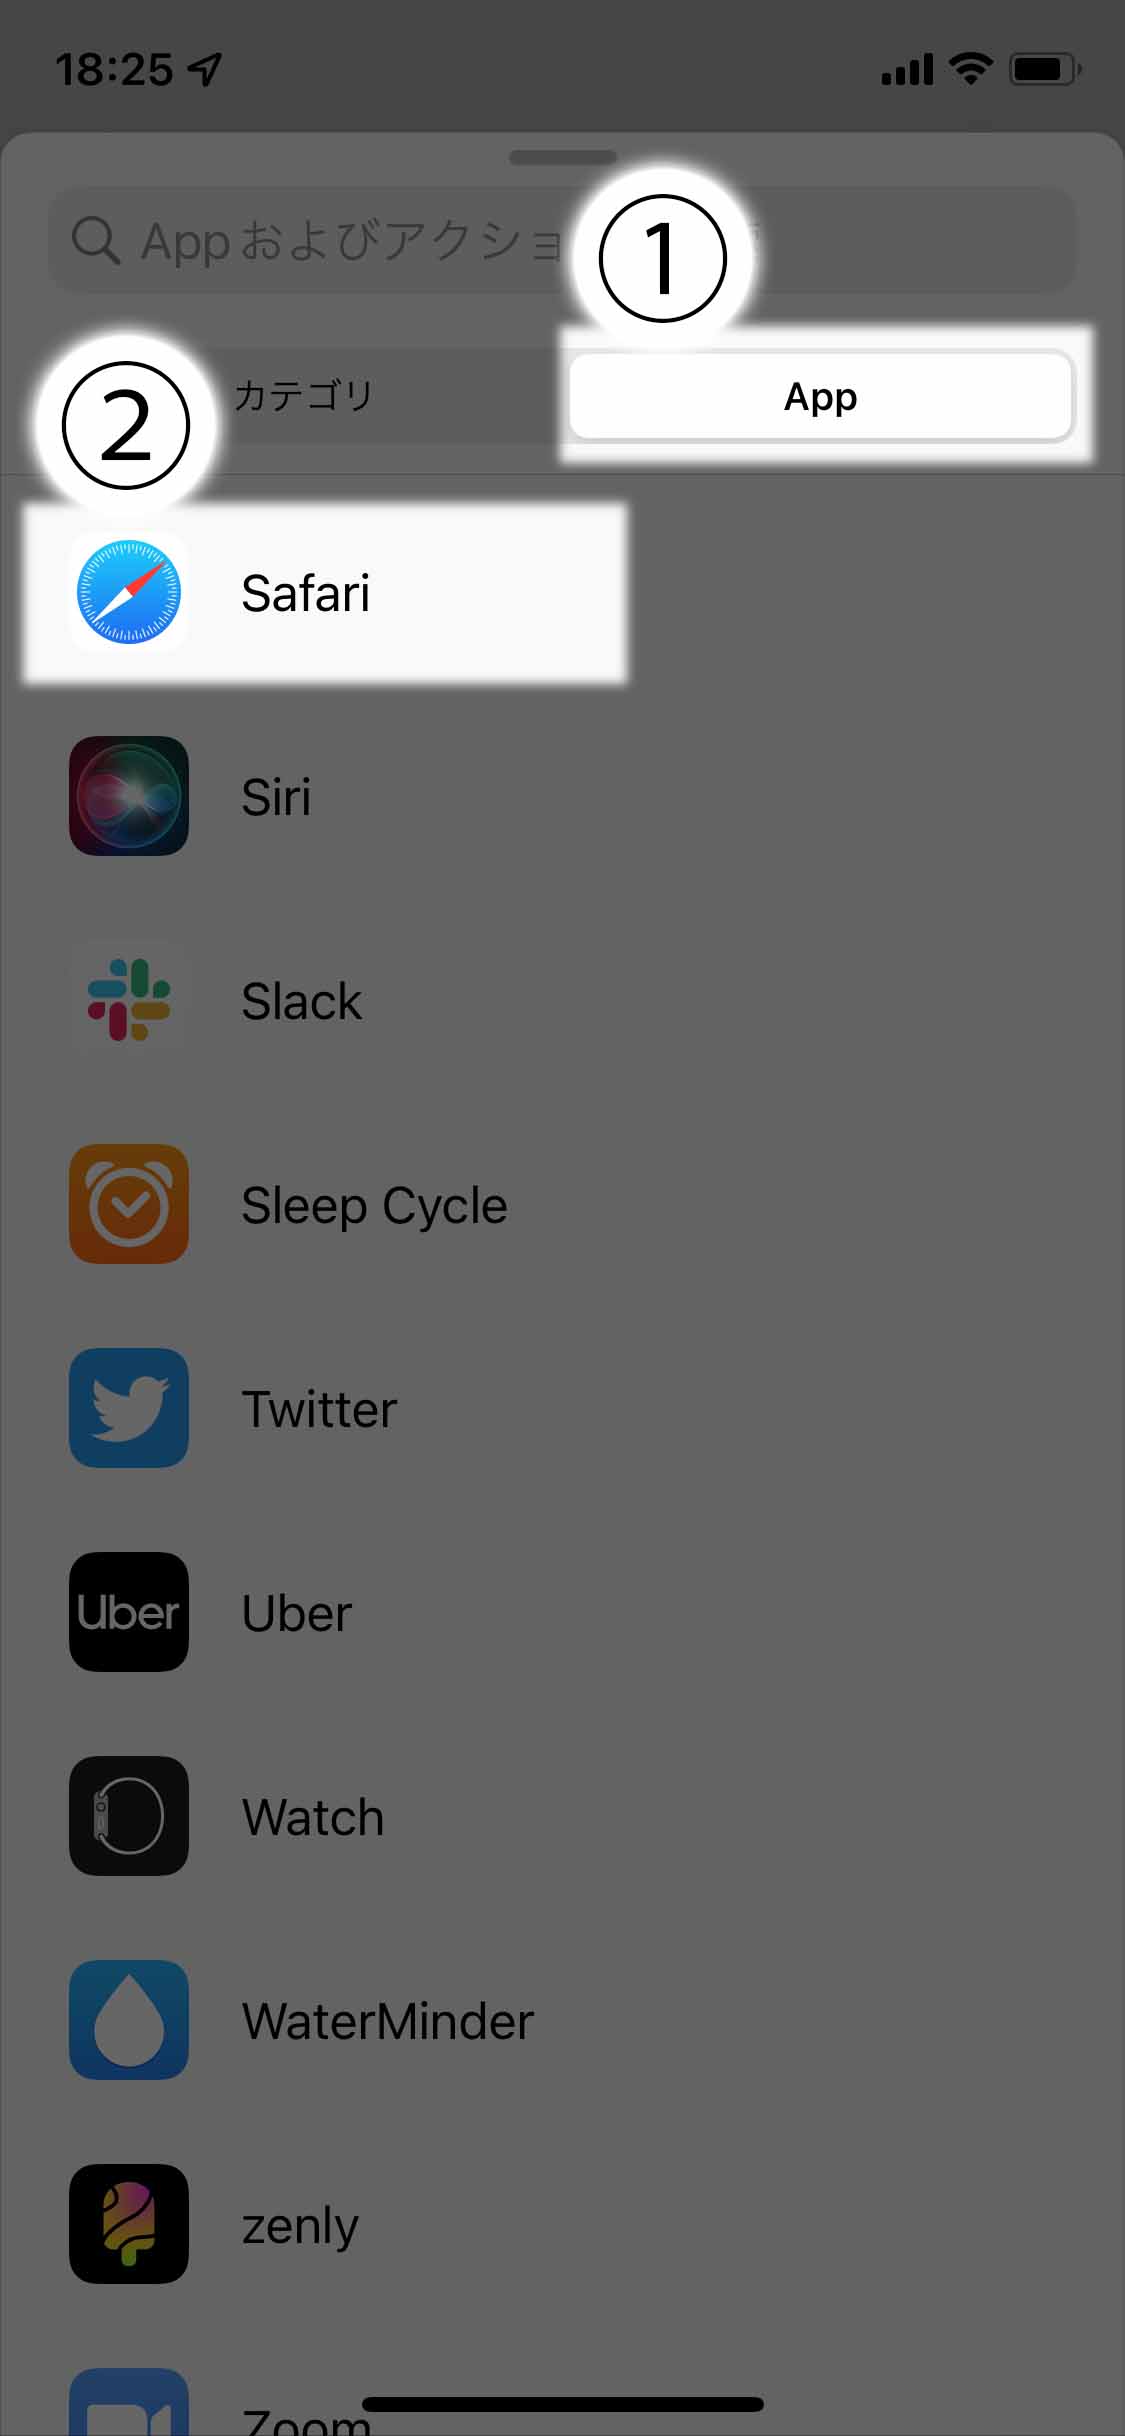 「App」から「Safari」を選択